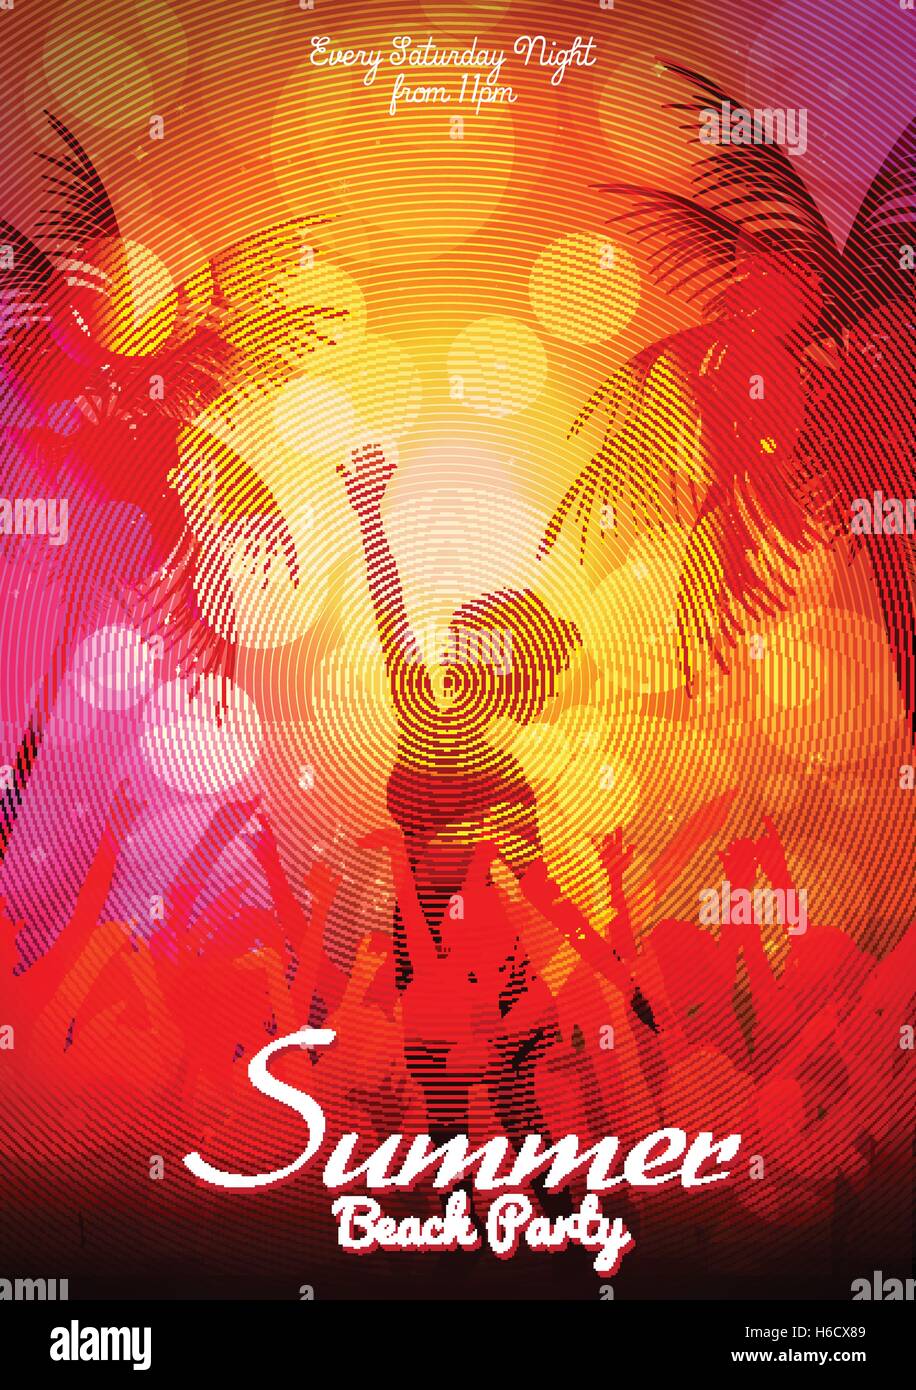 Summer Beach Party Flyer Template Vector Illustration Stock Vector Image Art Alamy